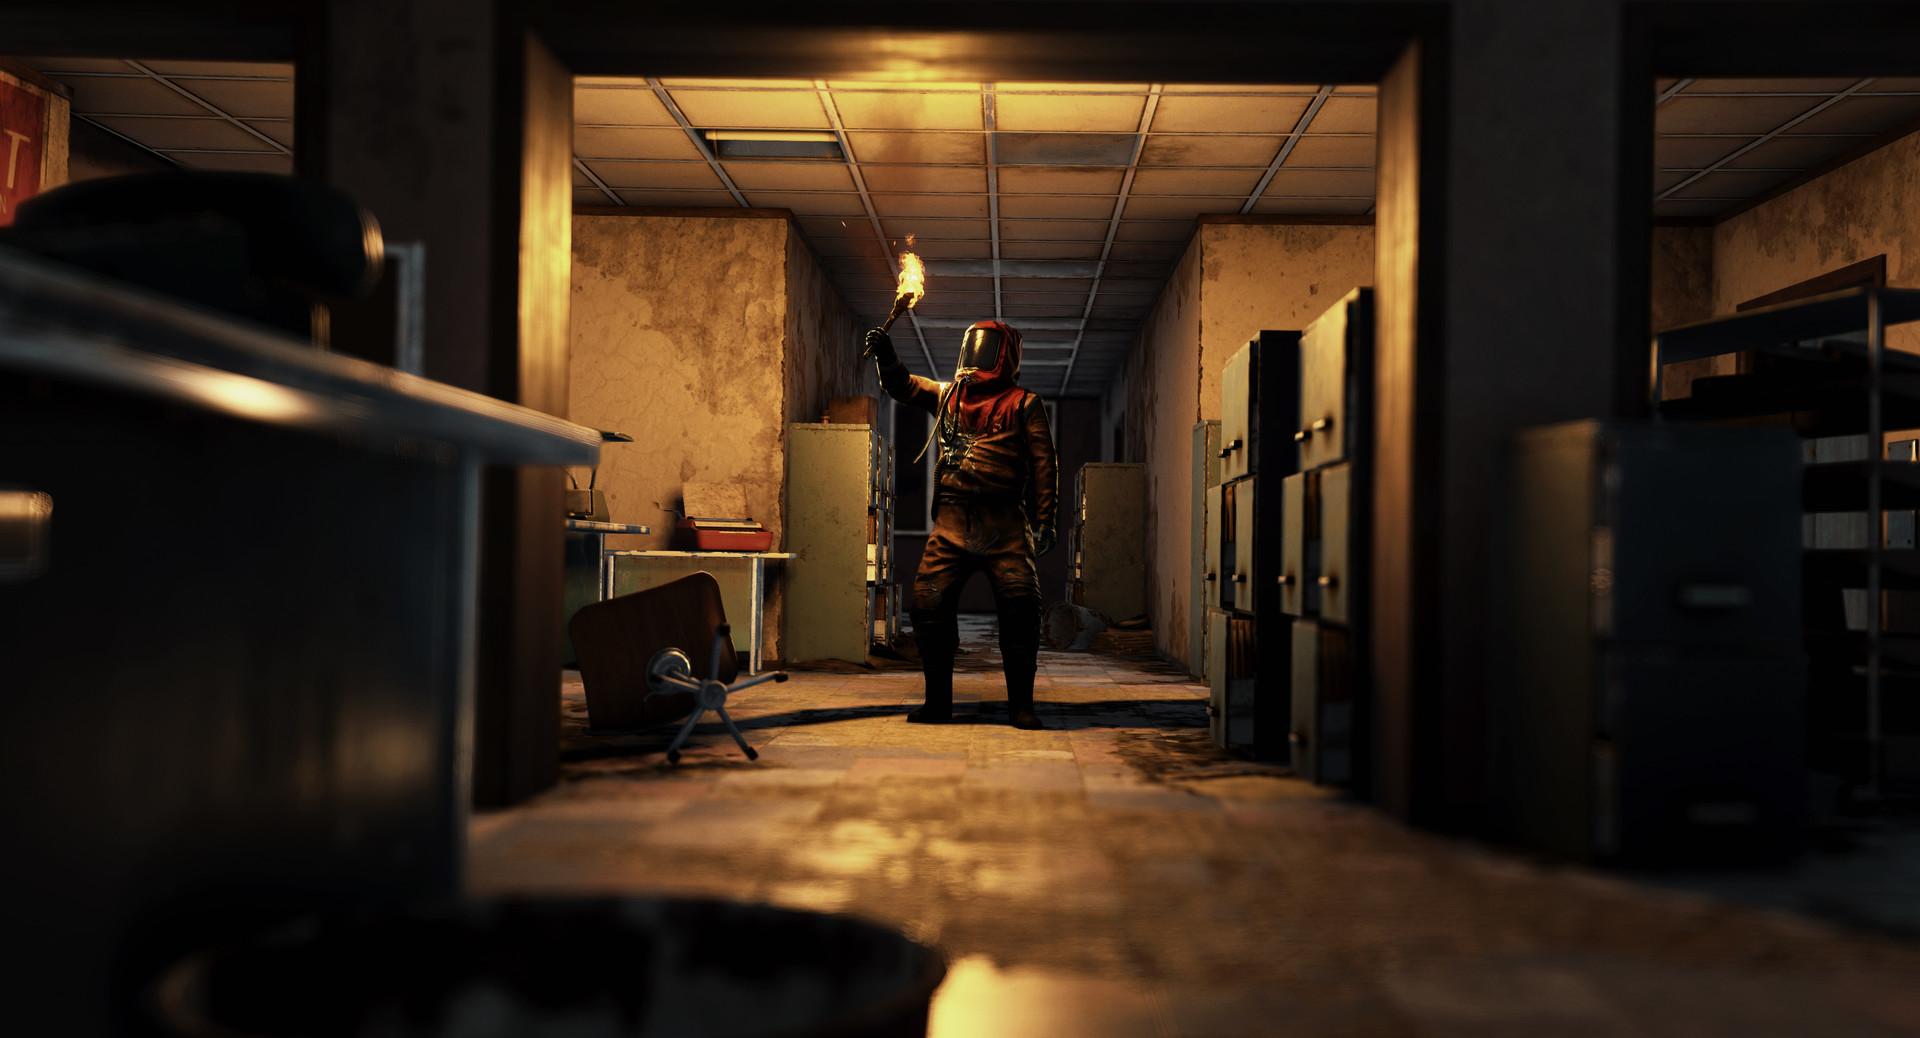 Screenshot №6 from game Rust